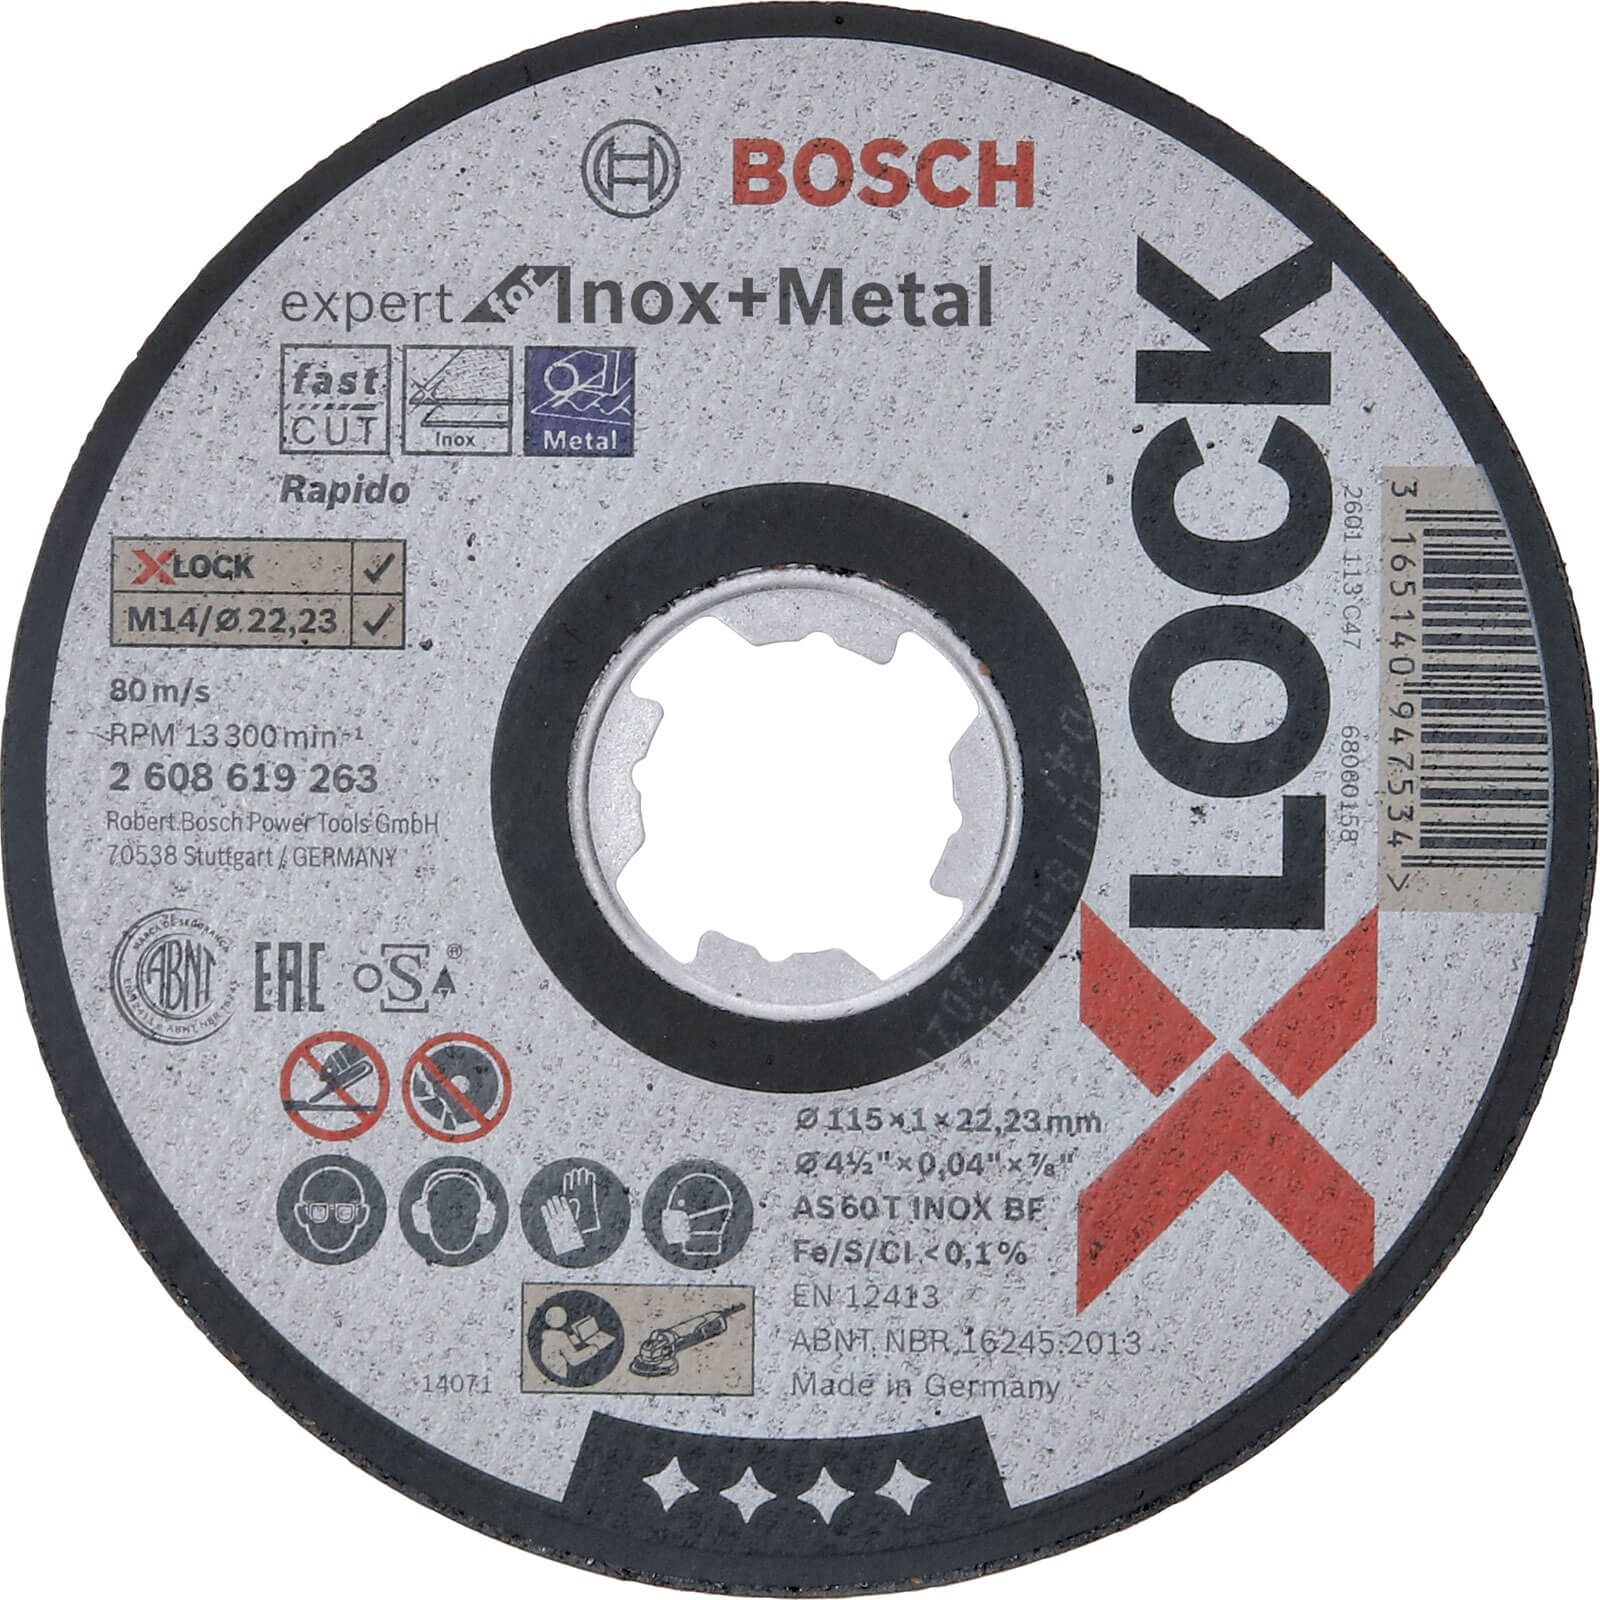 Photos - Cutting Disc Bosch Expert X Lock Rapido Metal and Inox  115mm 1mm 22mm 2608 